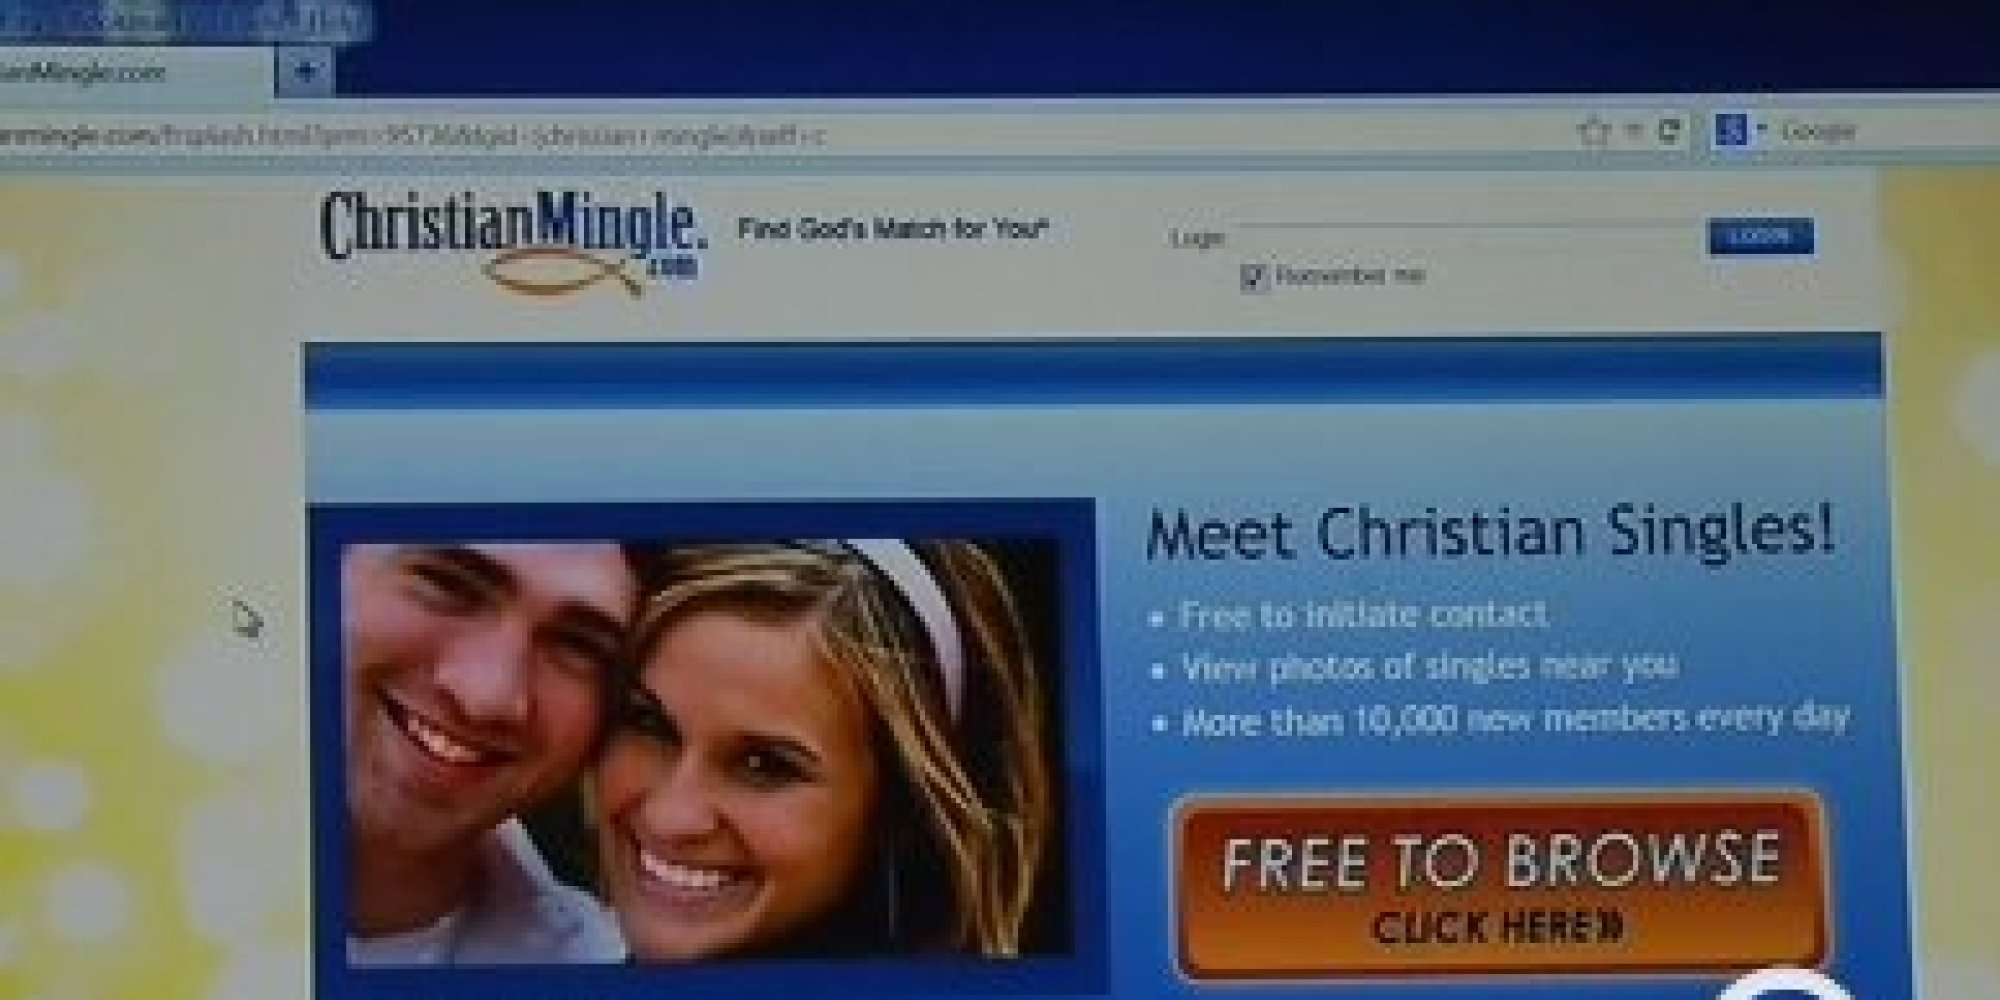 Christian dating sites uk kostenlos